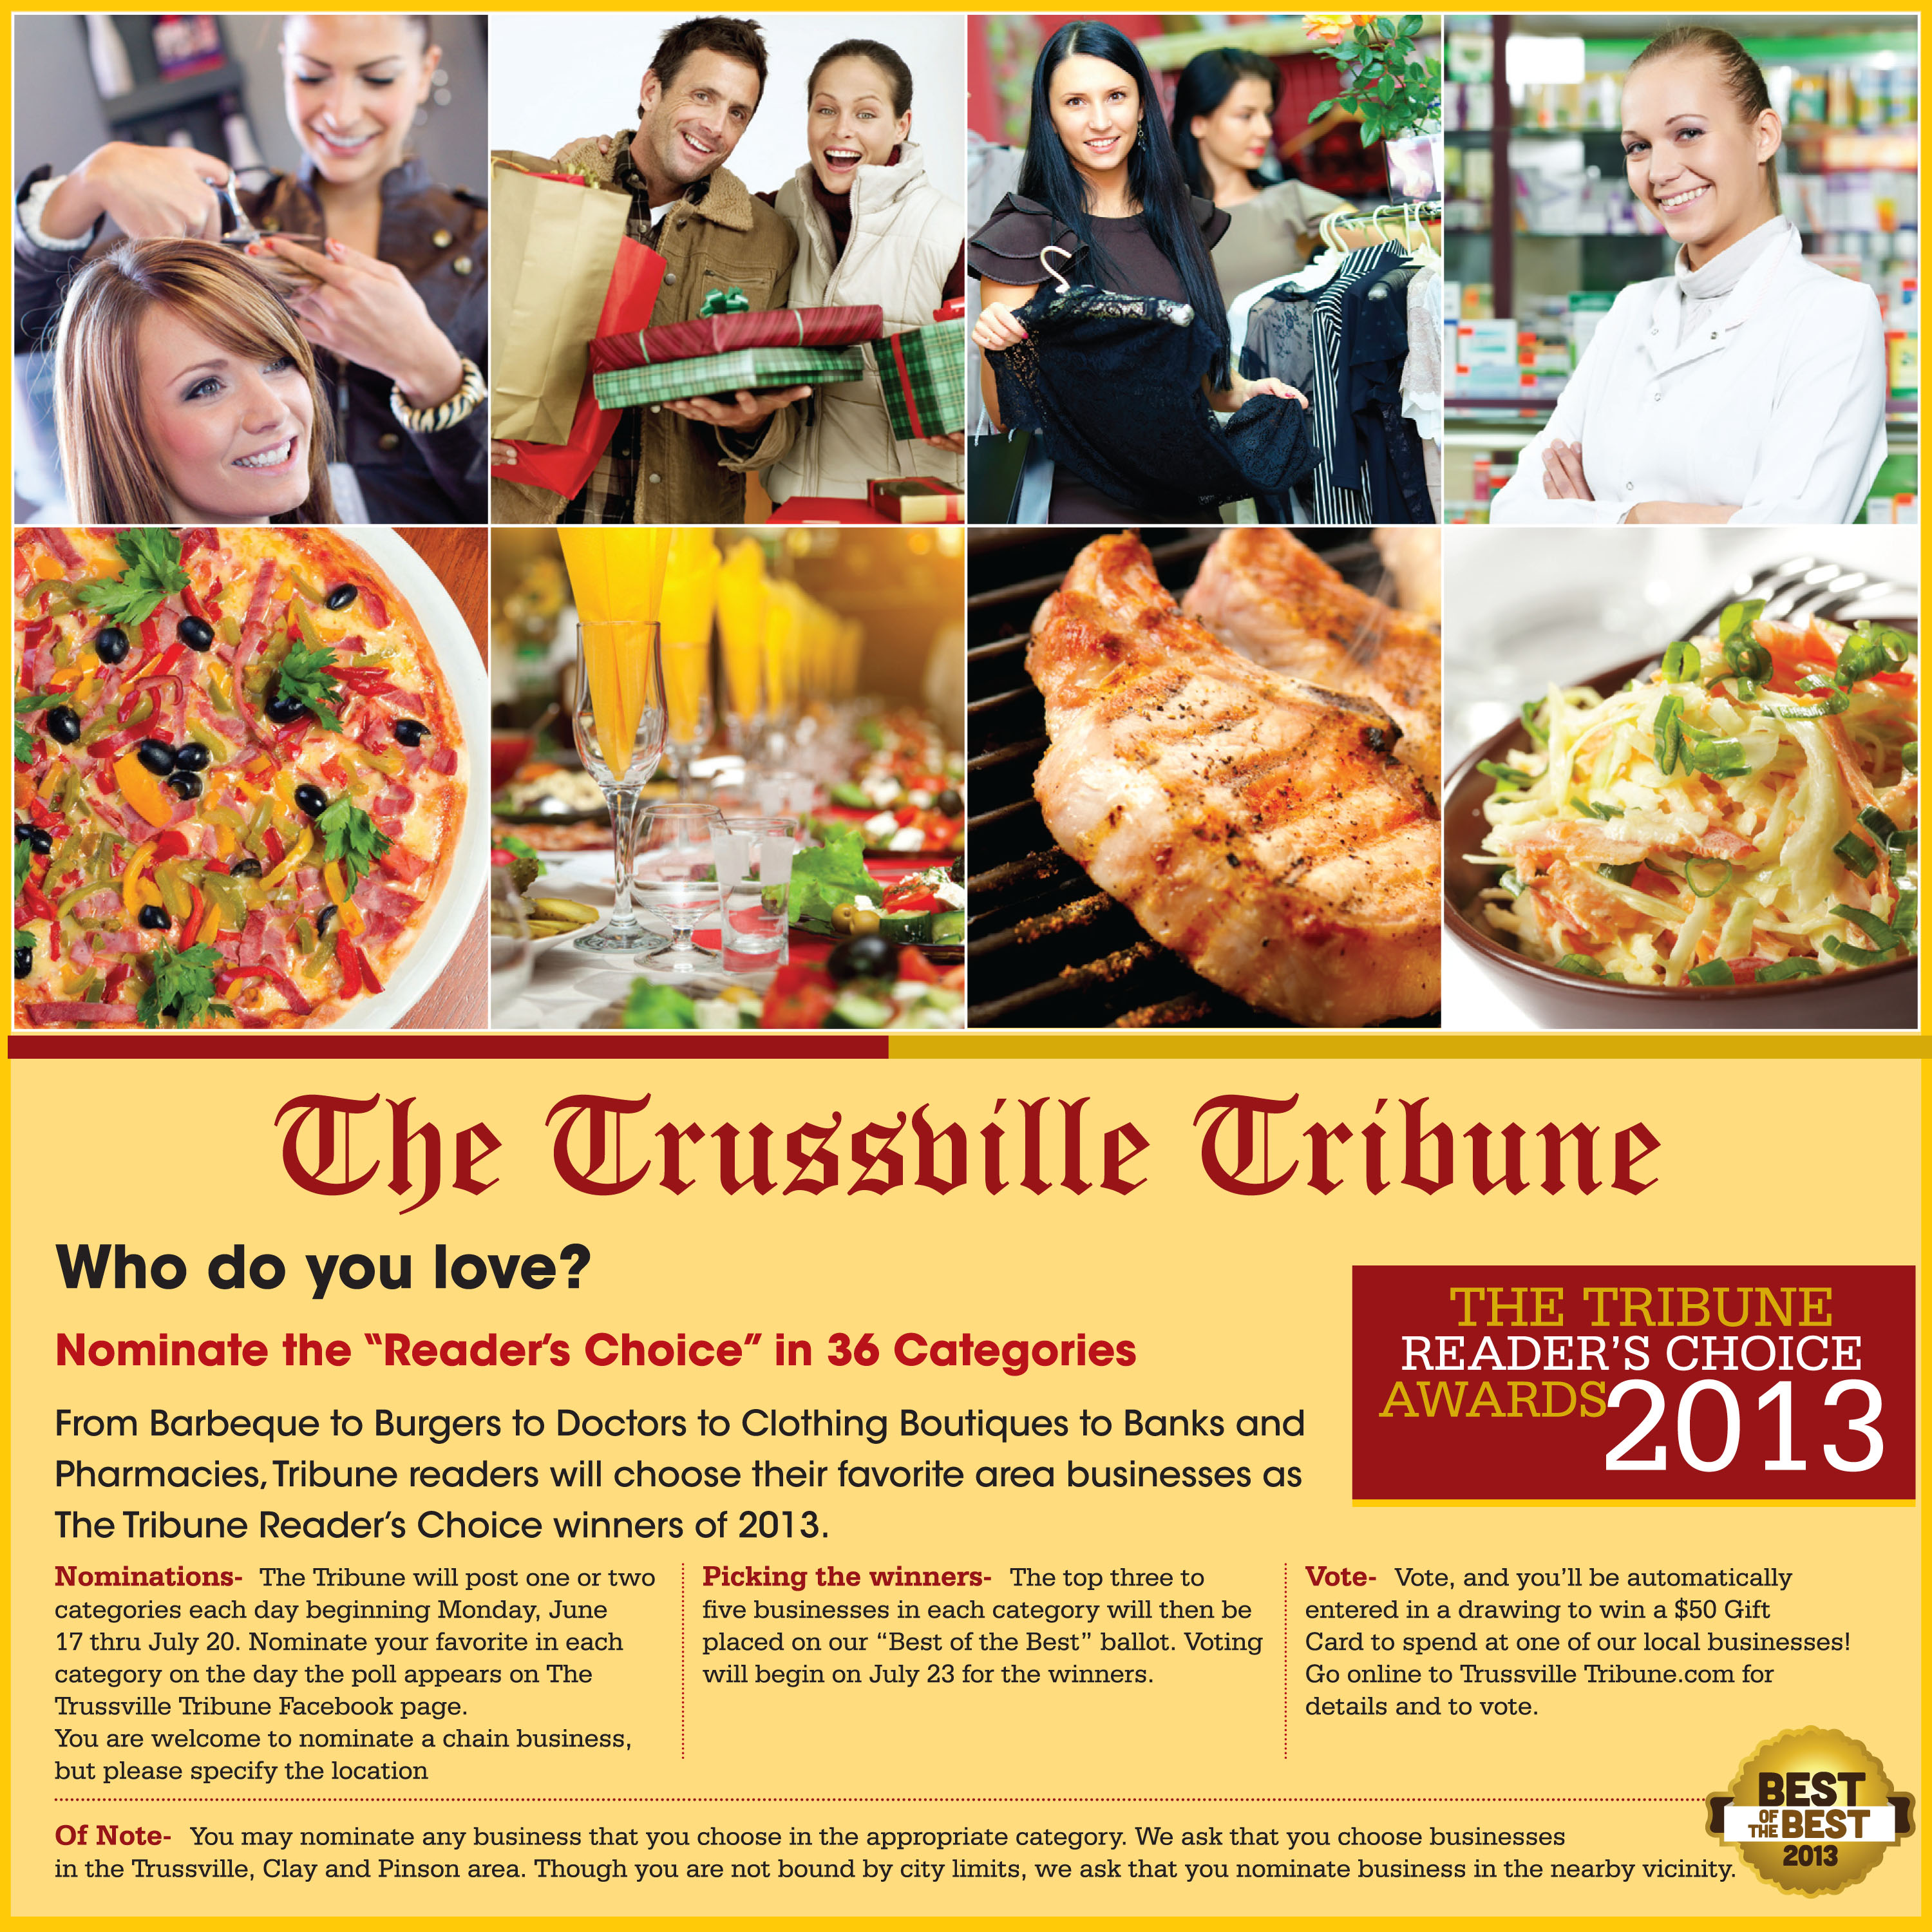 2013 Tribune Readers' Choice Award nominations underway